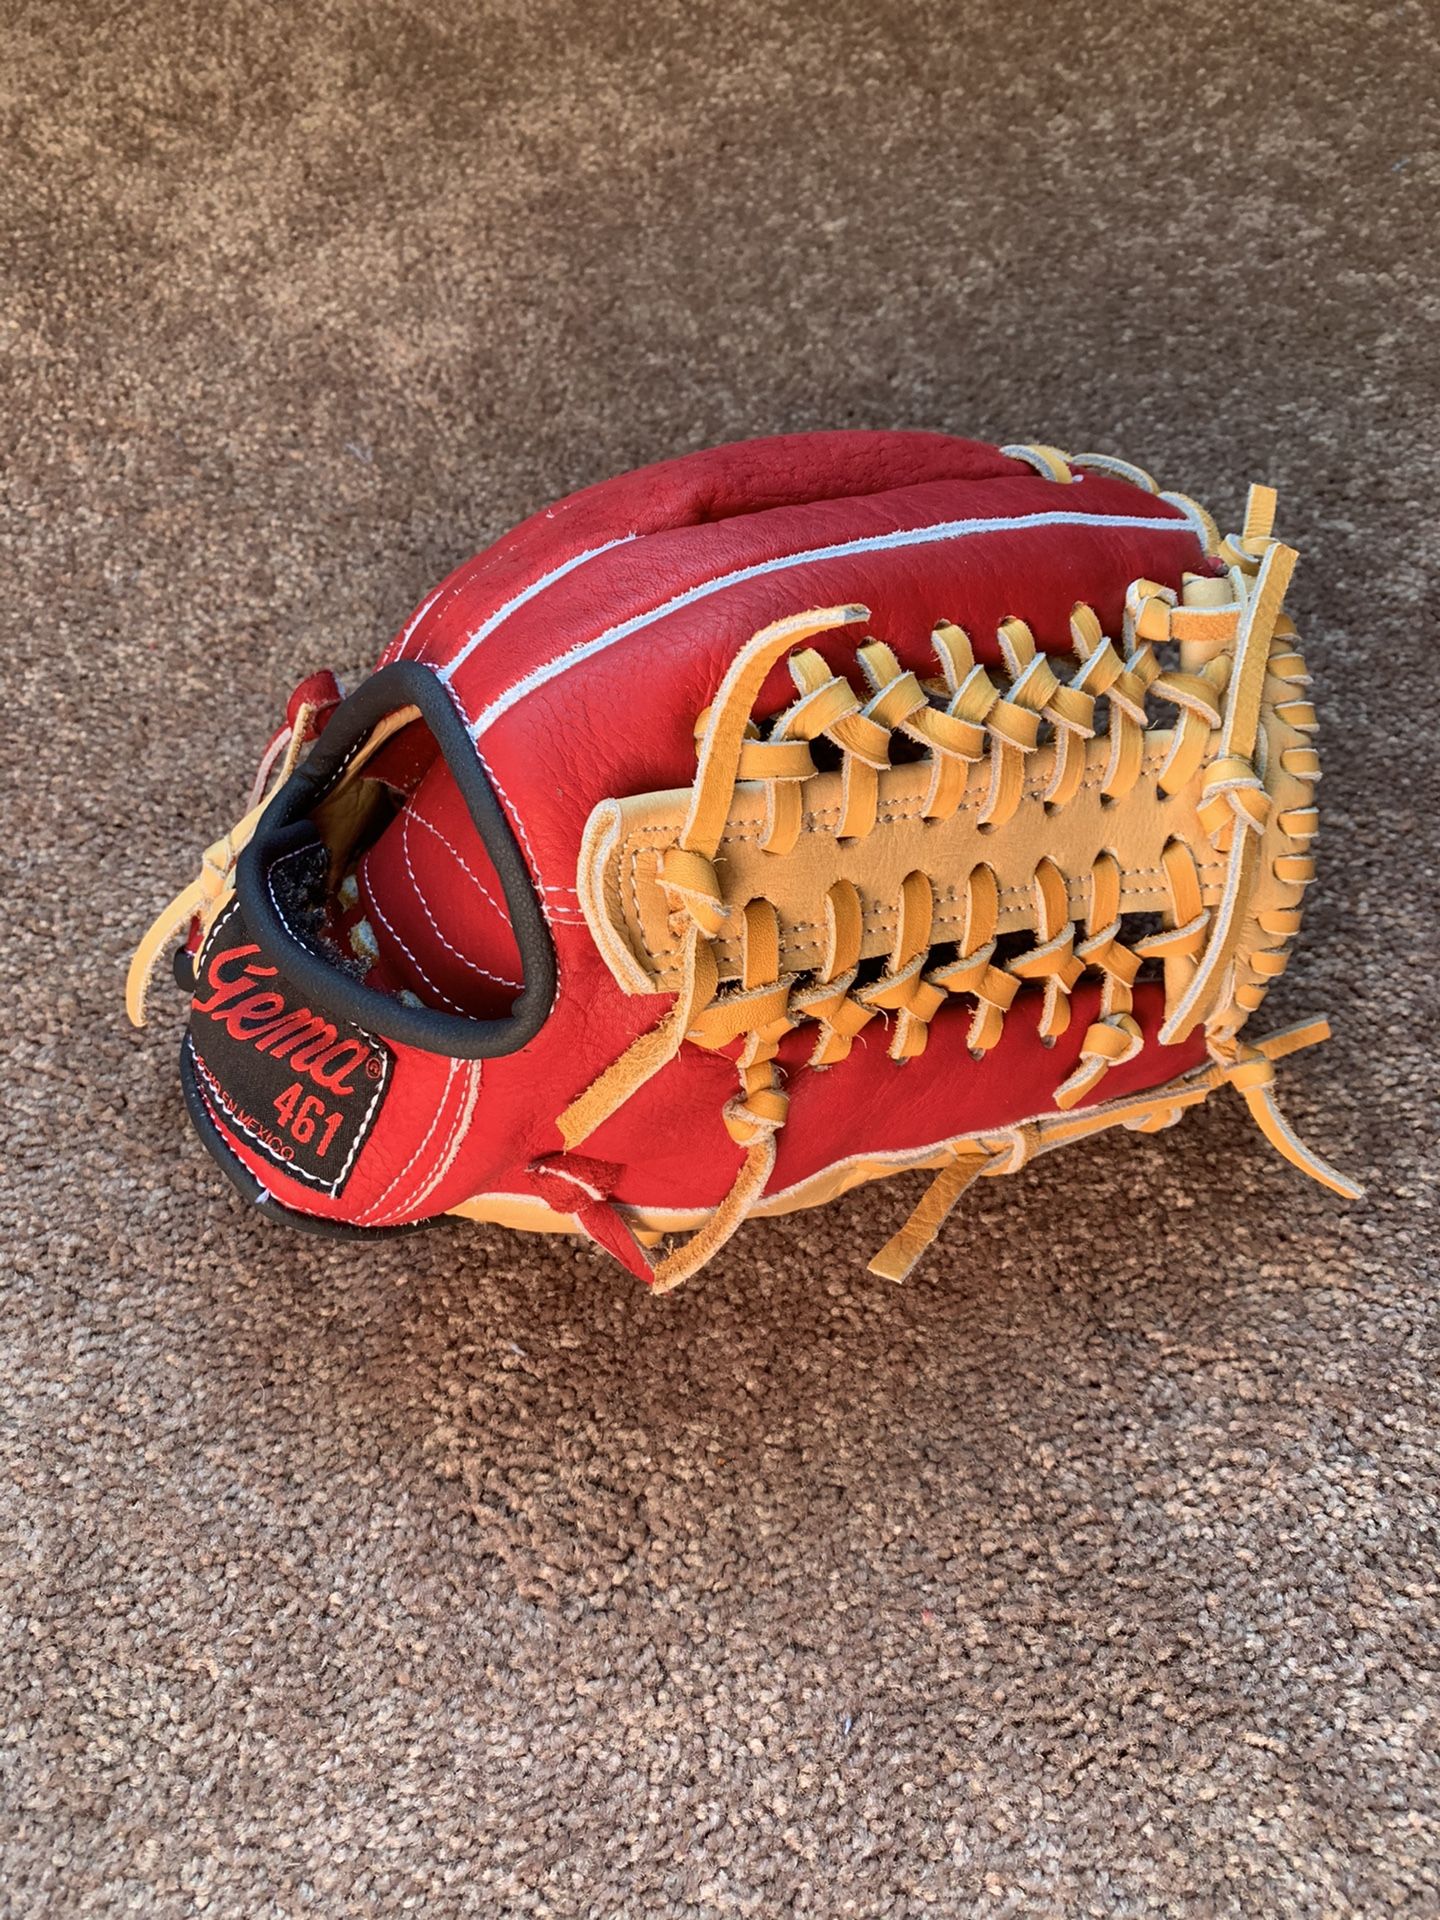 Mexican Baseball Glove, 12.5-inch